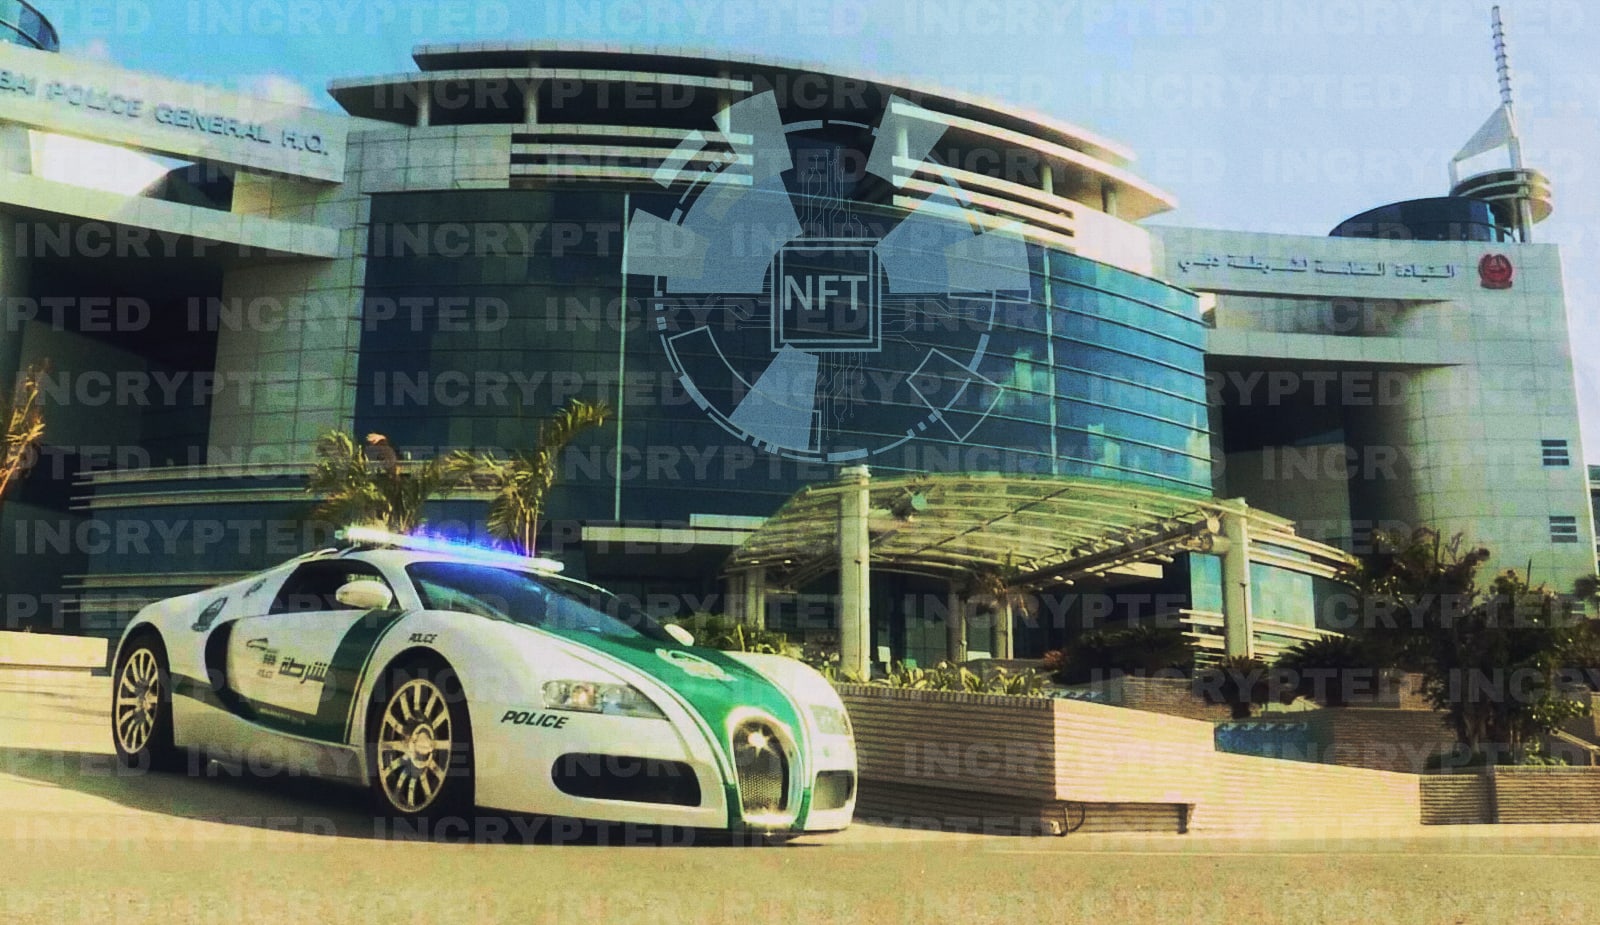 Дубаи - технологичная страна, которая активно вводит NFT, как ввела ранее электро-автомобили и снабдила полицию супер карами.